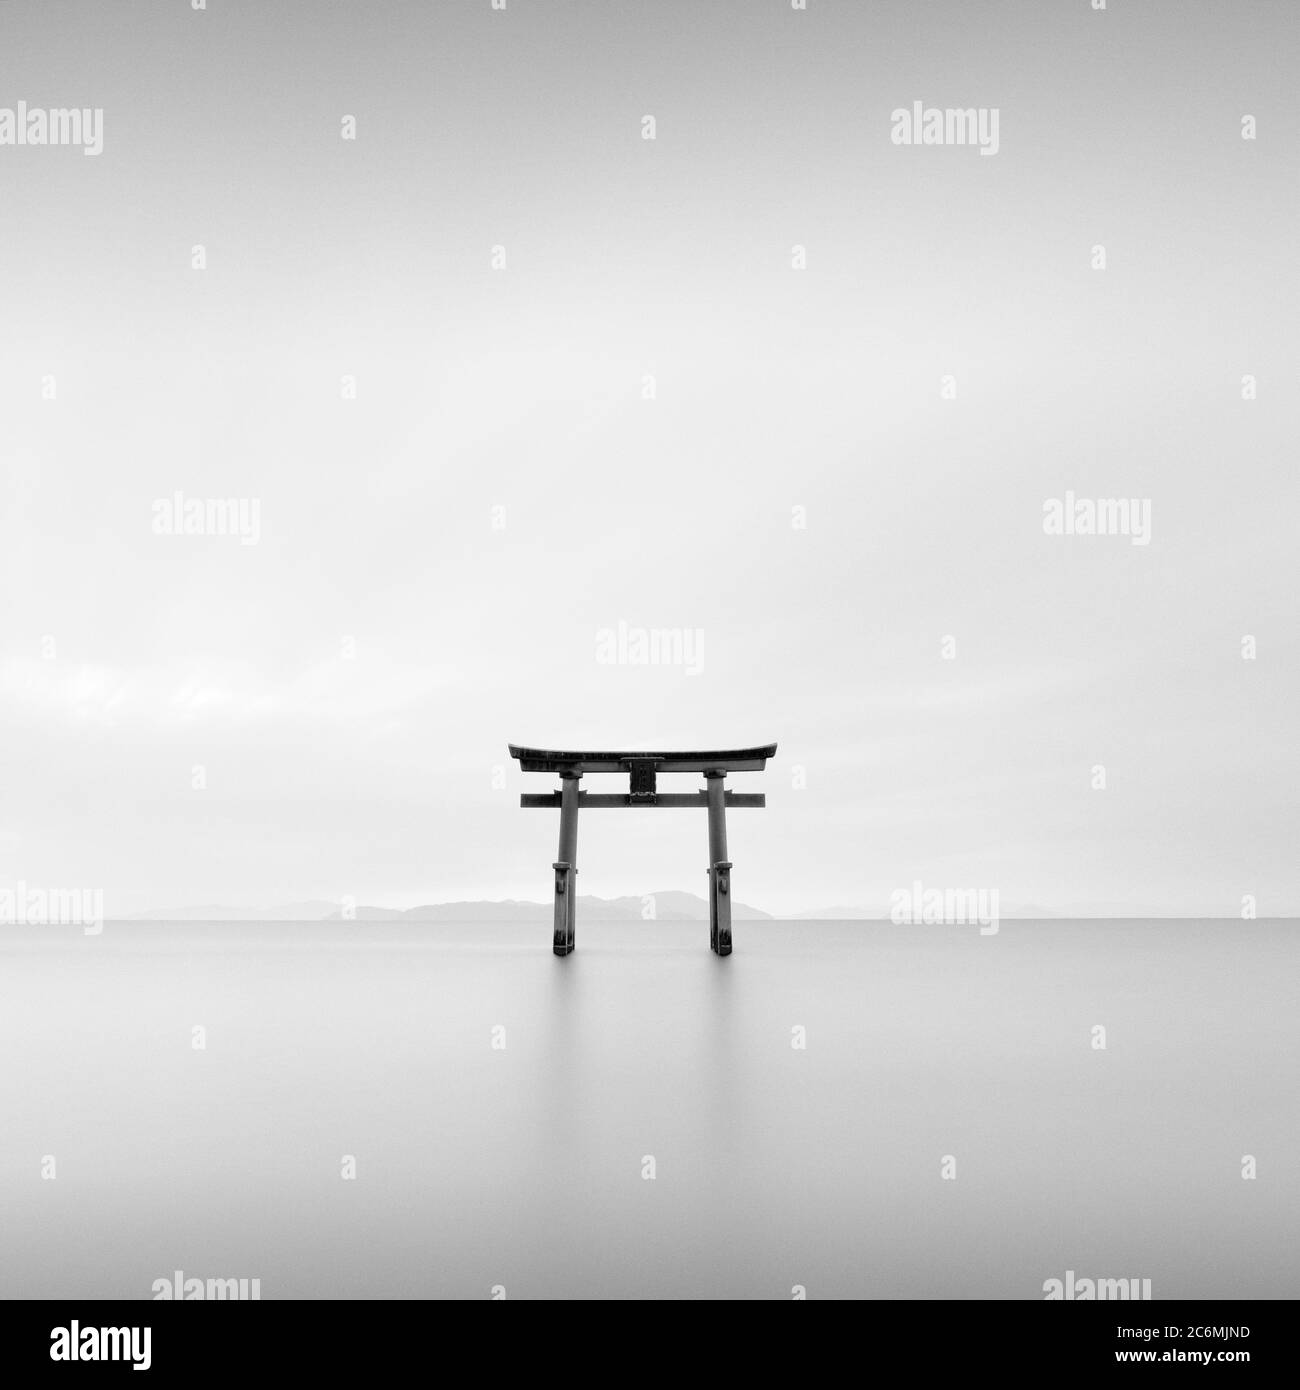 Long exposure shot of Shirahige shrine Torii gate at sunrise, Lake Biwa, Shiga Prefecture, Japan Stock Photo